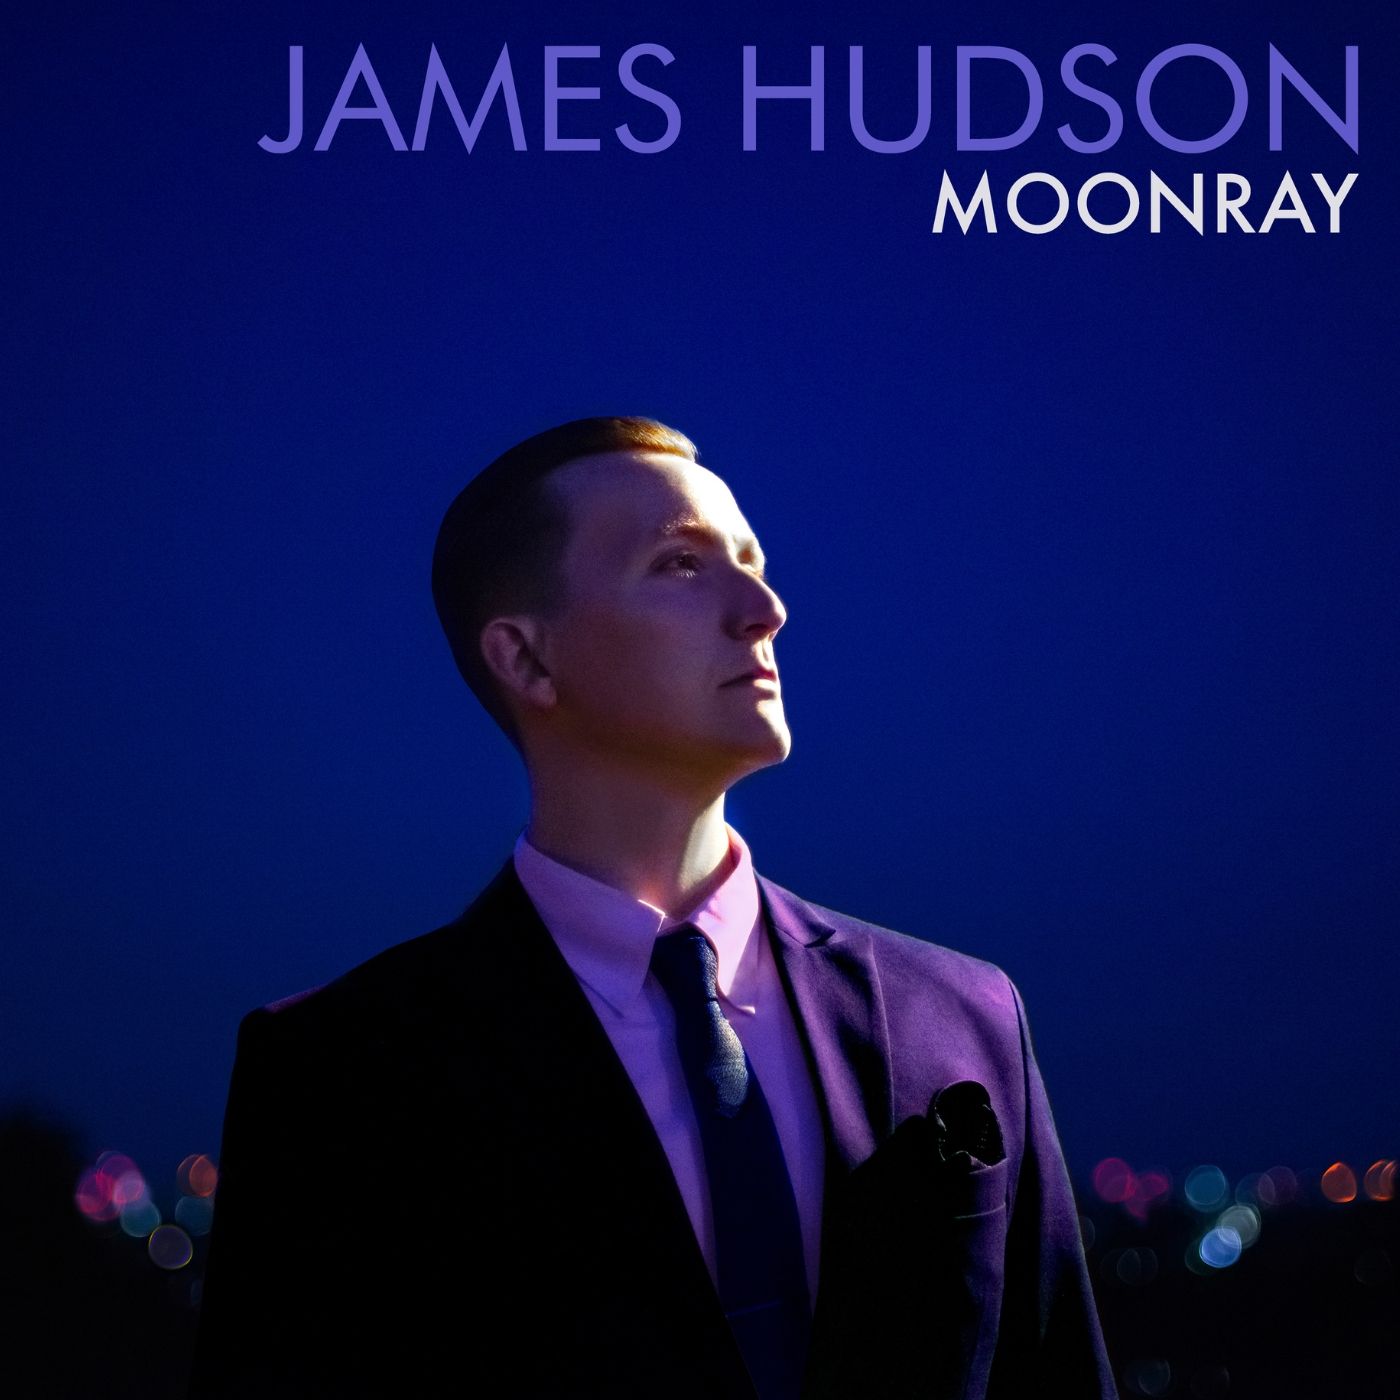 Moonray by James Hudson